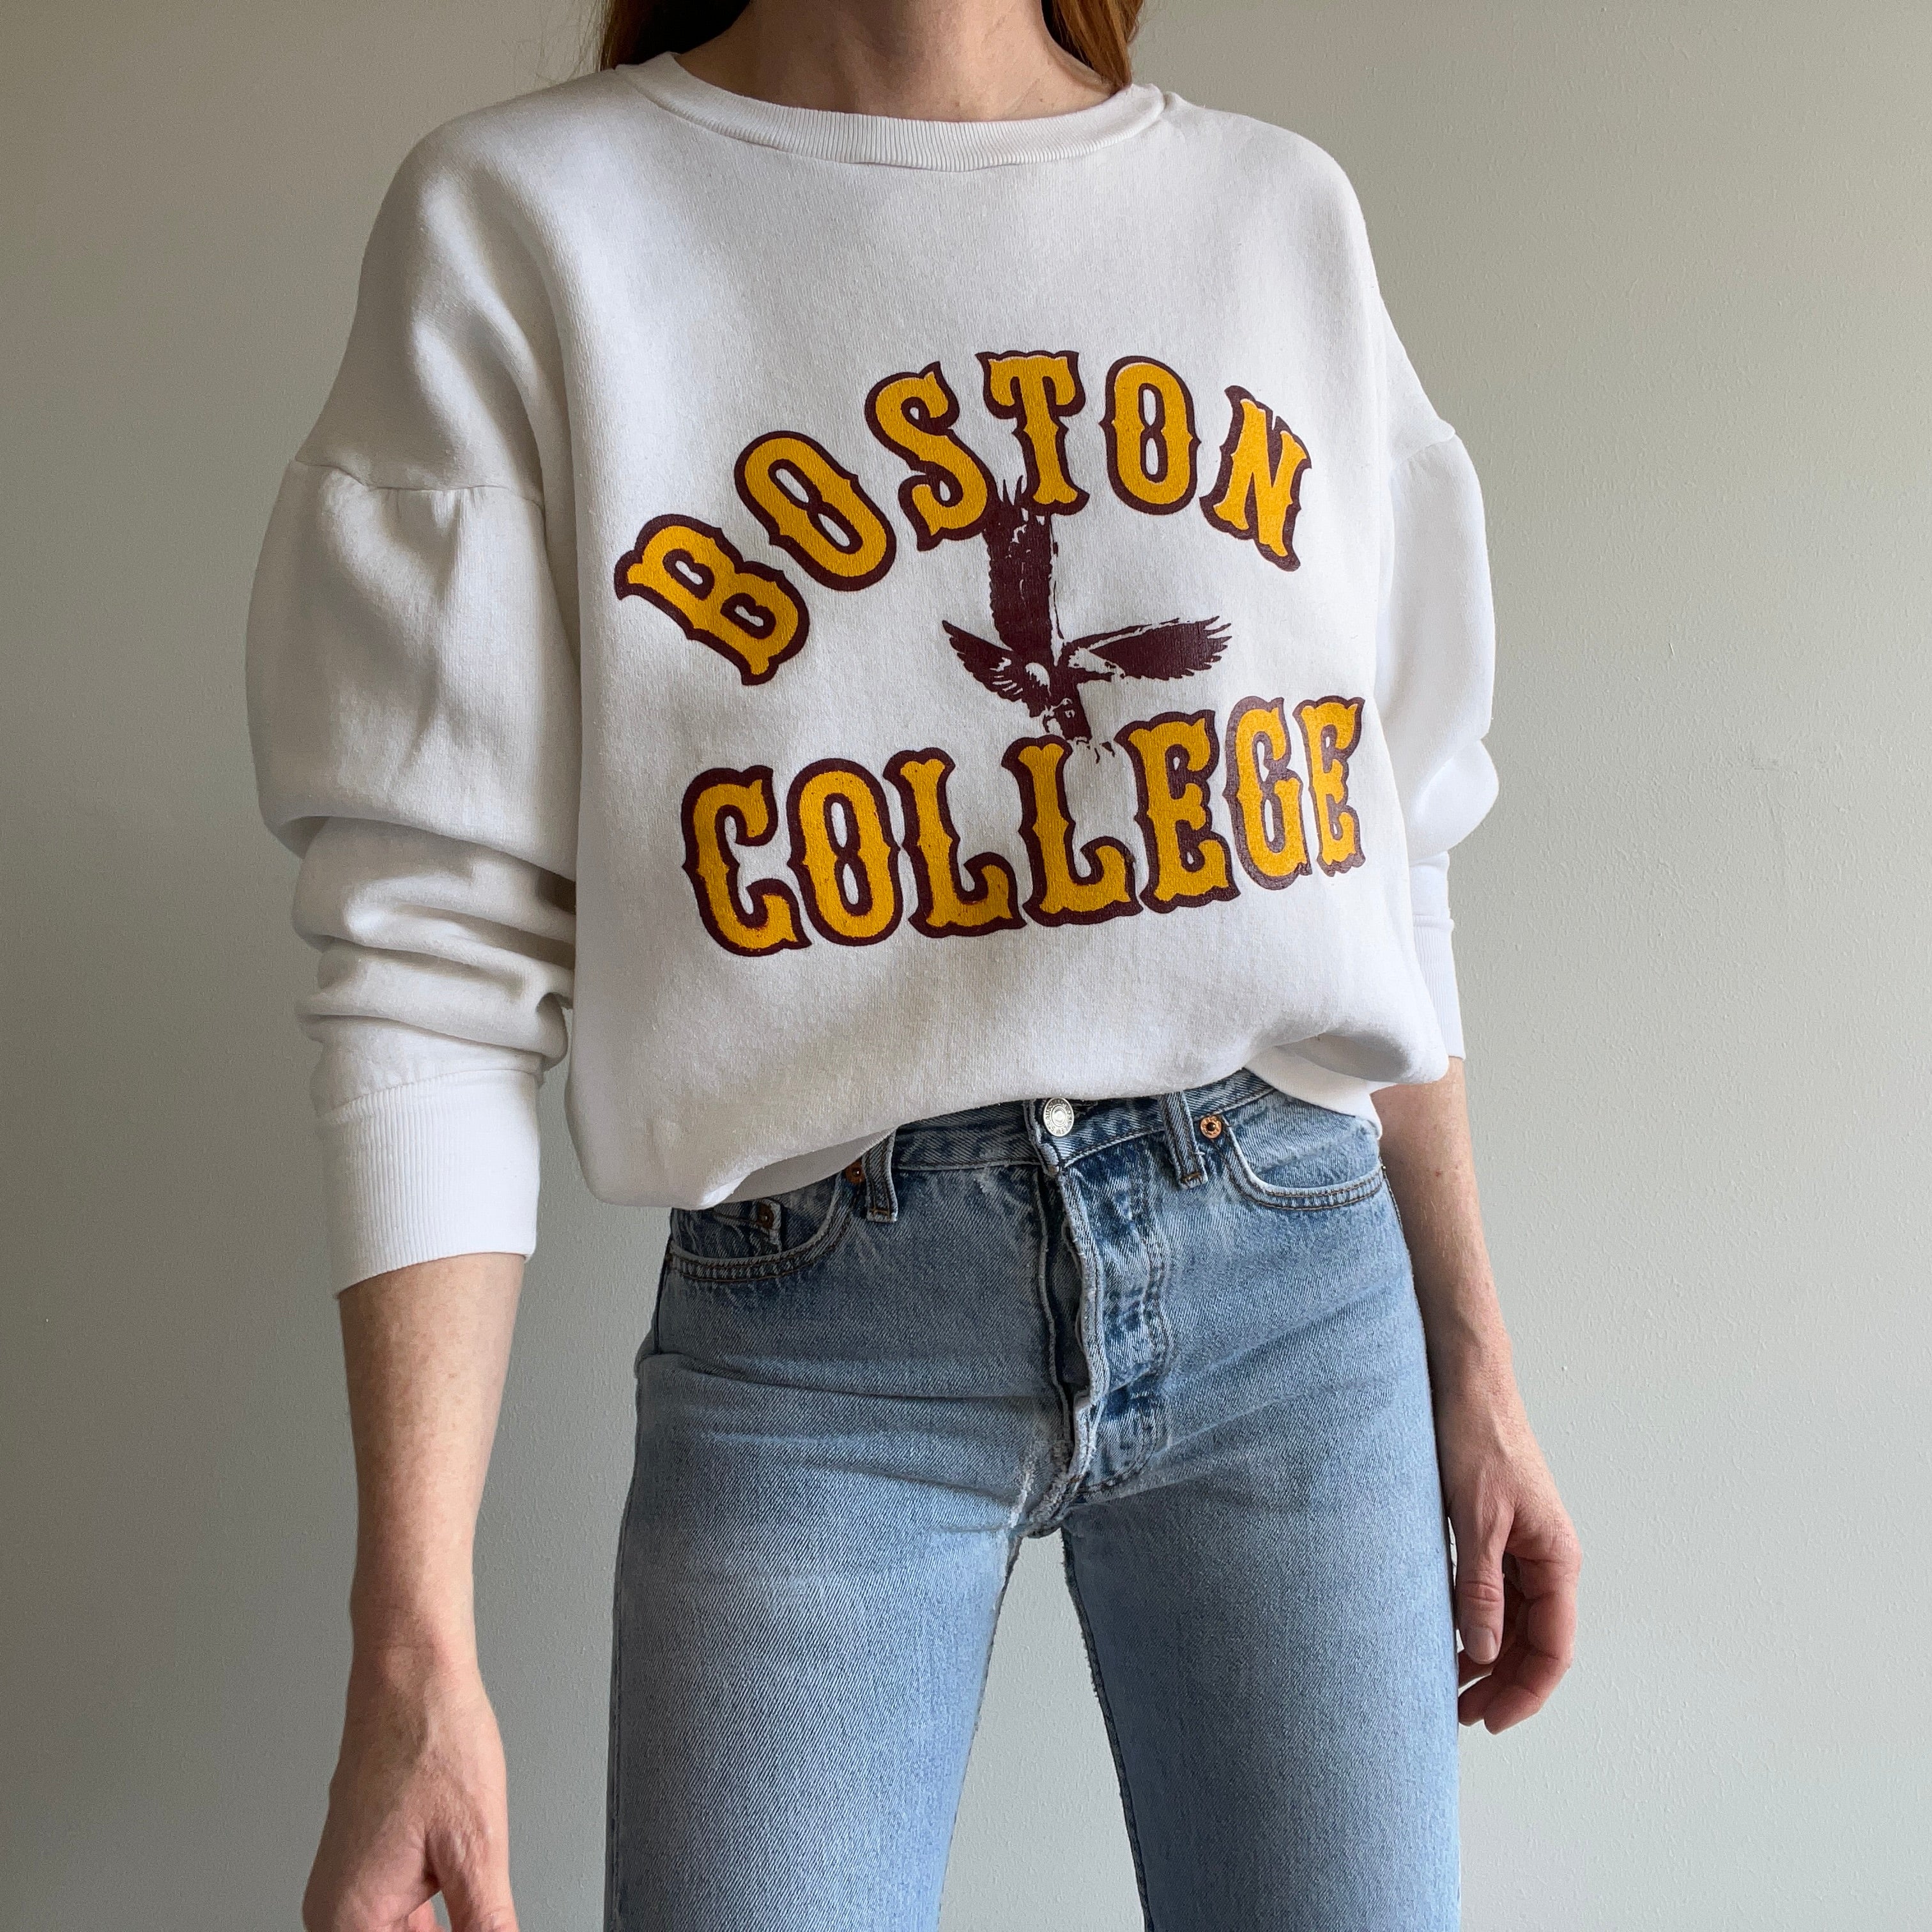 1970/80s Boston College Sweatshirt - Personal Collection